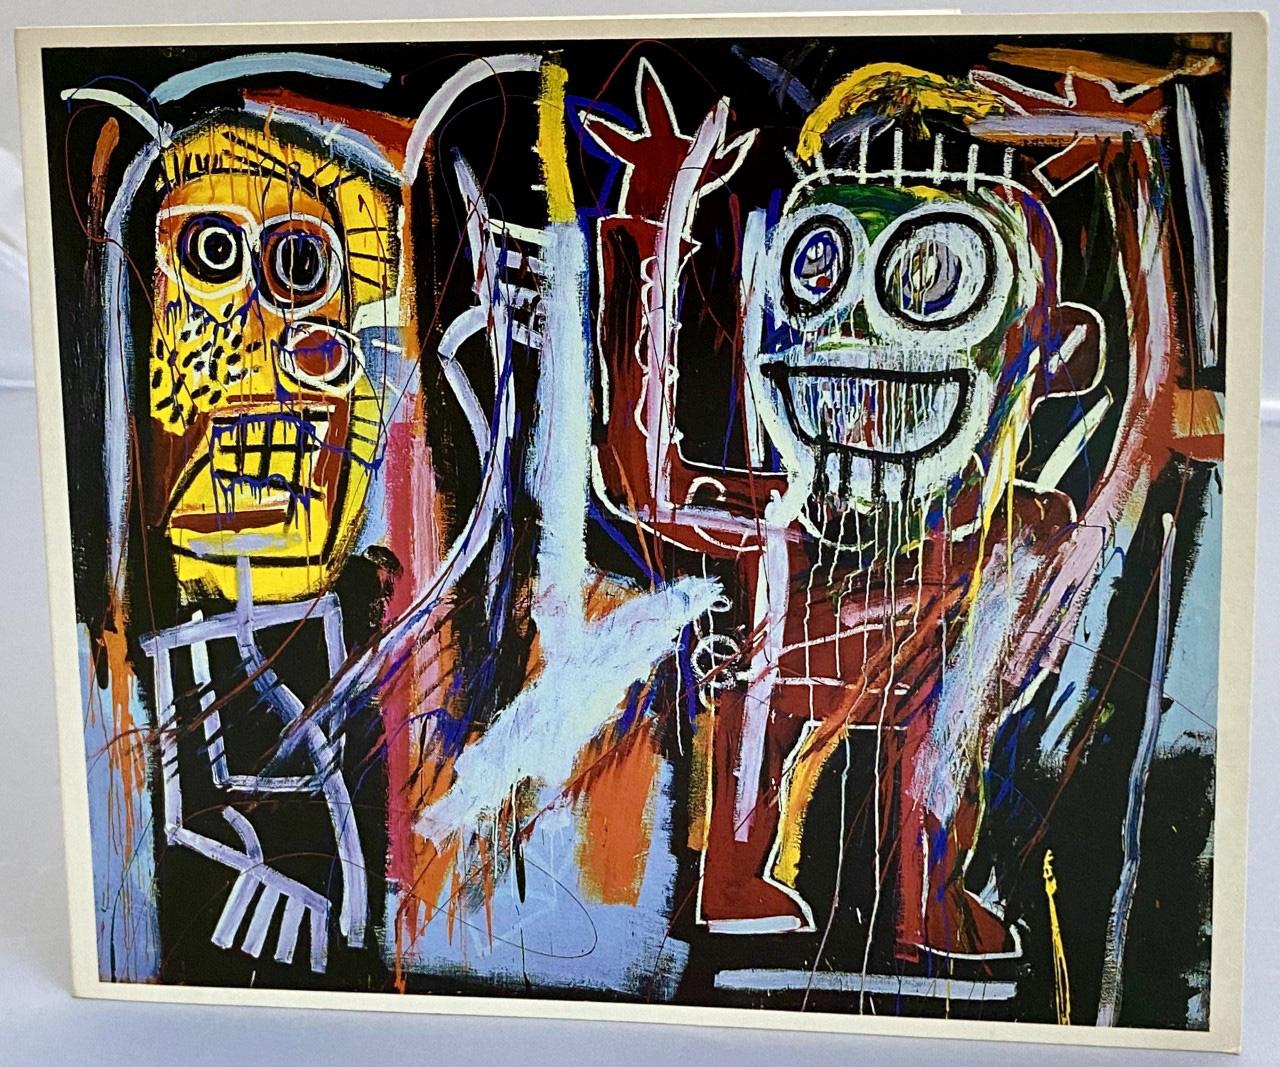 Basquiat at Tony Shafrazi gallery 1996 (Basquiat Dust Heads announcement)  - Print by (after) Jean-Michel Basquiat